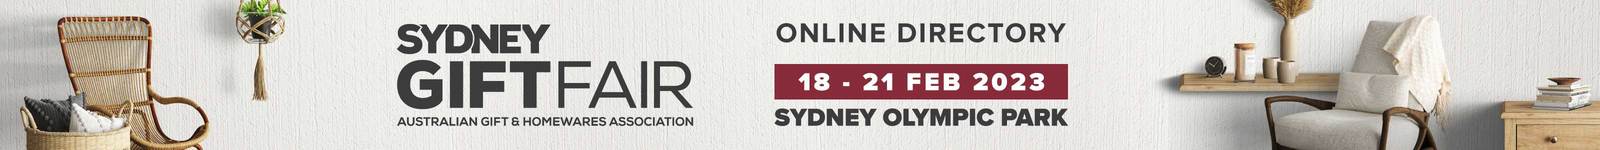 Sydney Gift Fair 2023 logo